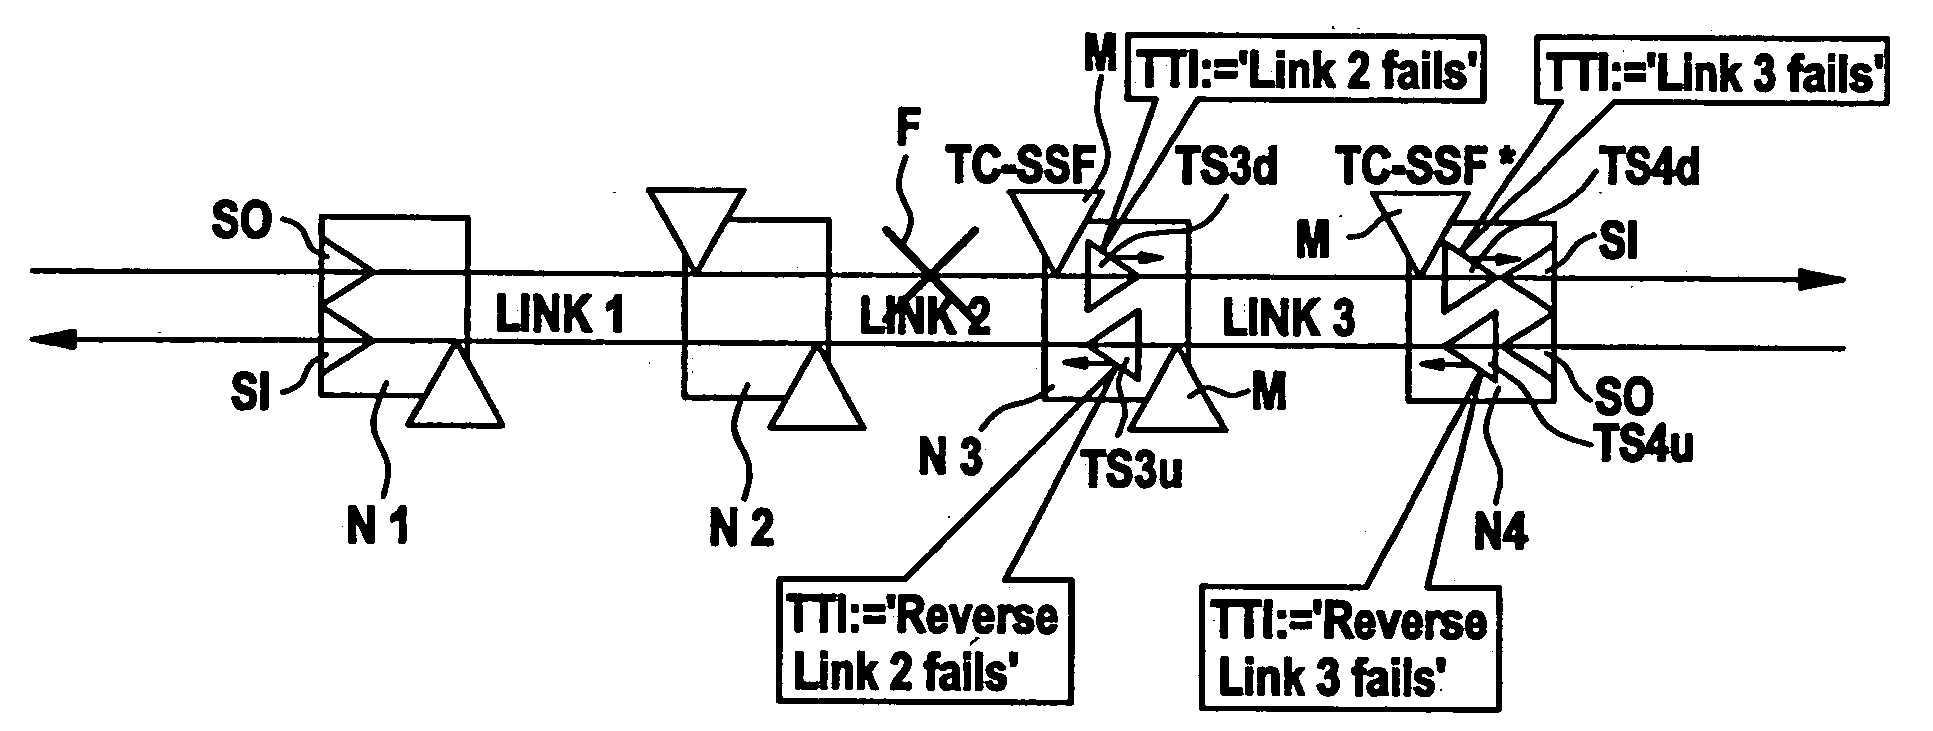 Failure localization in a transmission network